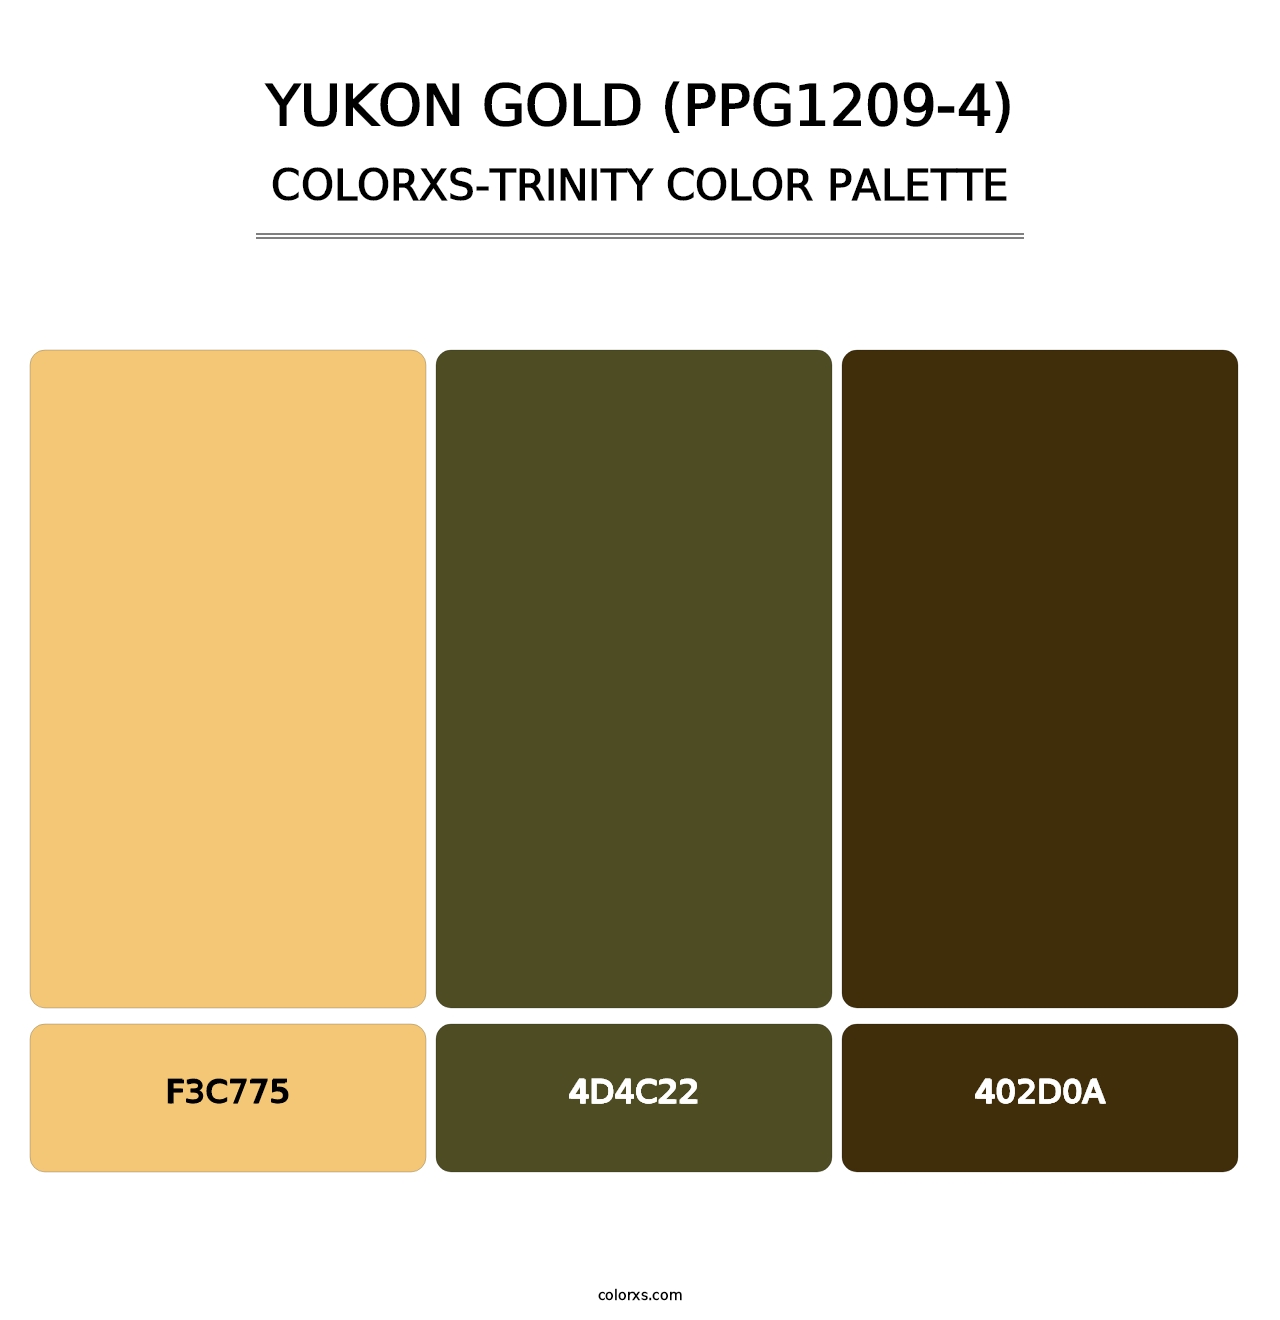 Yukon Gold (PPG1209-4) - Colorxs Trinity Palette